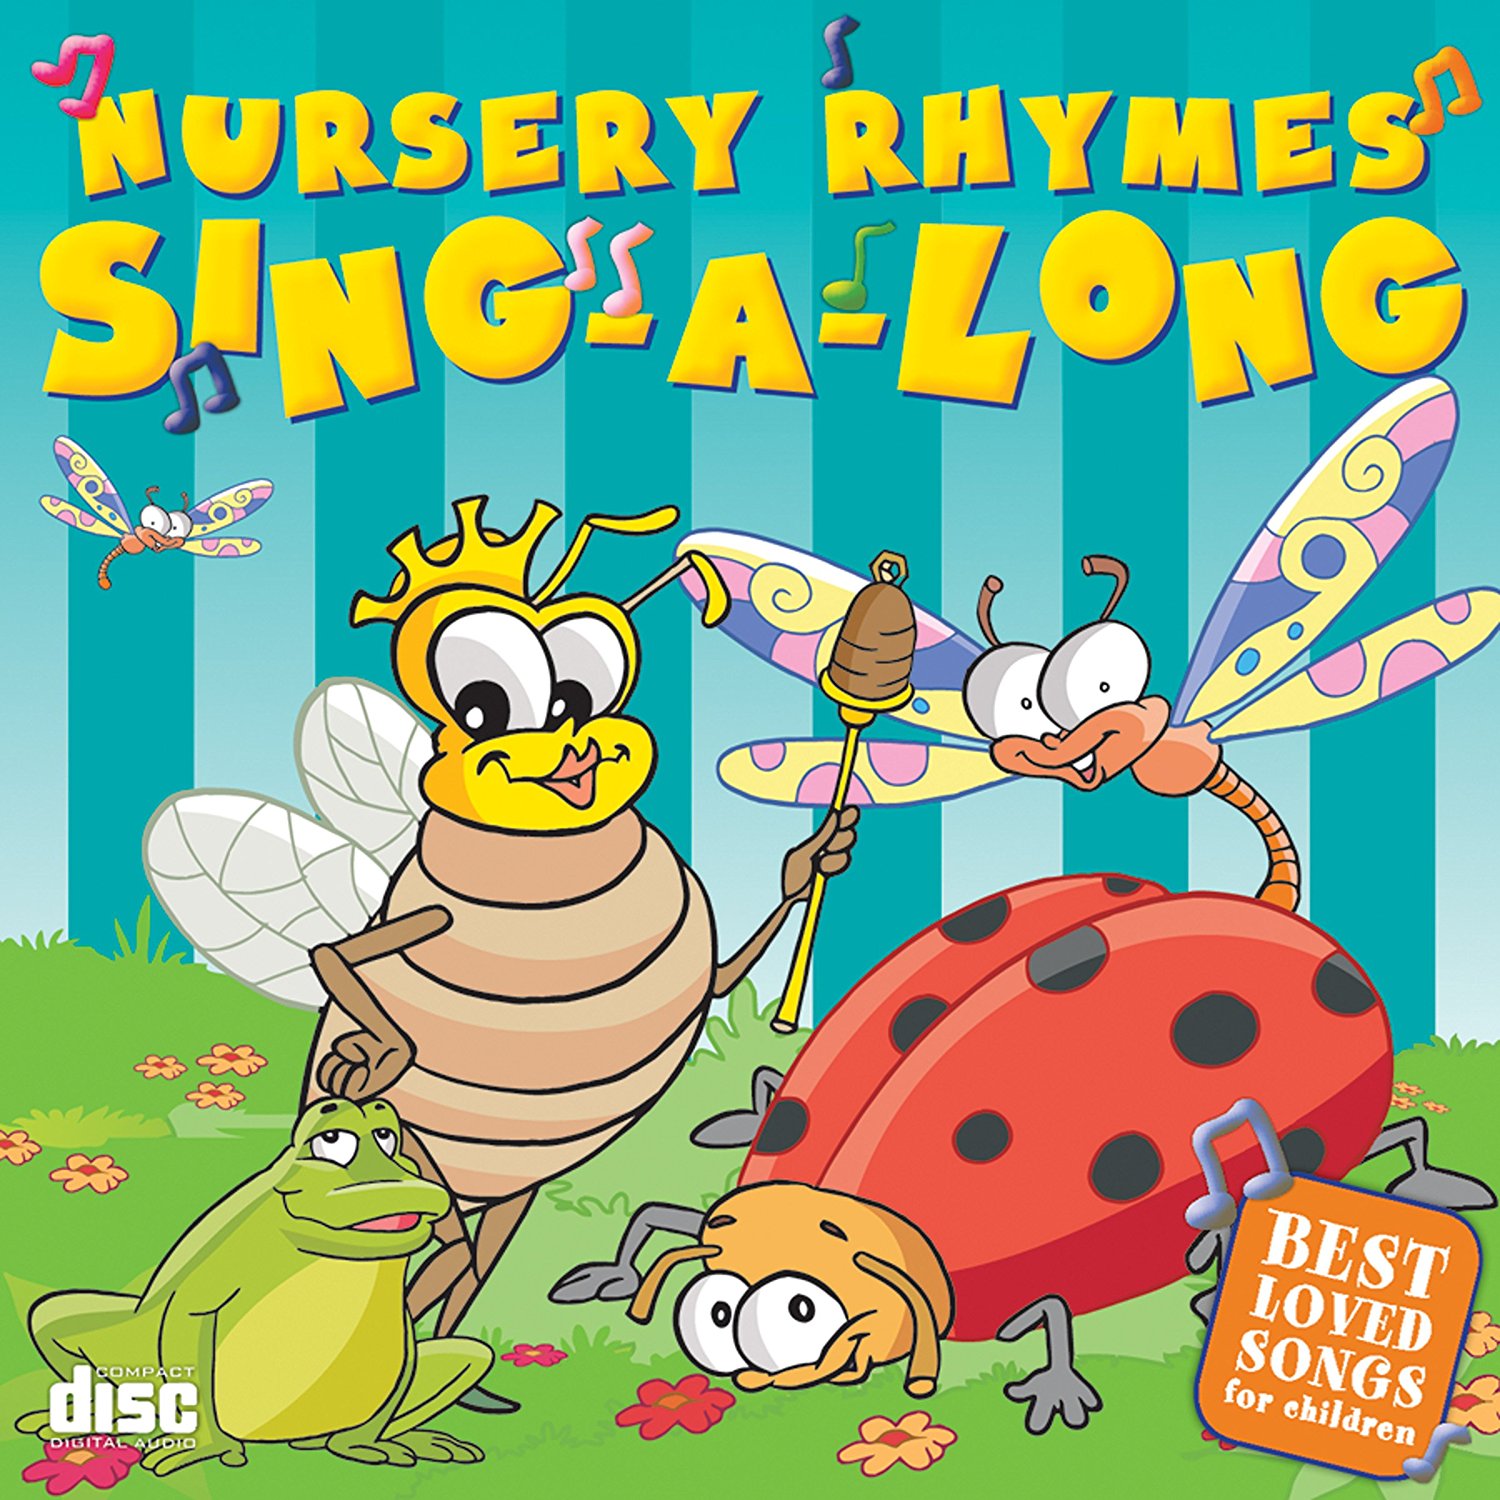 34 Nursery Rhymes Sing-a-longs - Best Loved Songs For Children by Various Artists